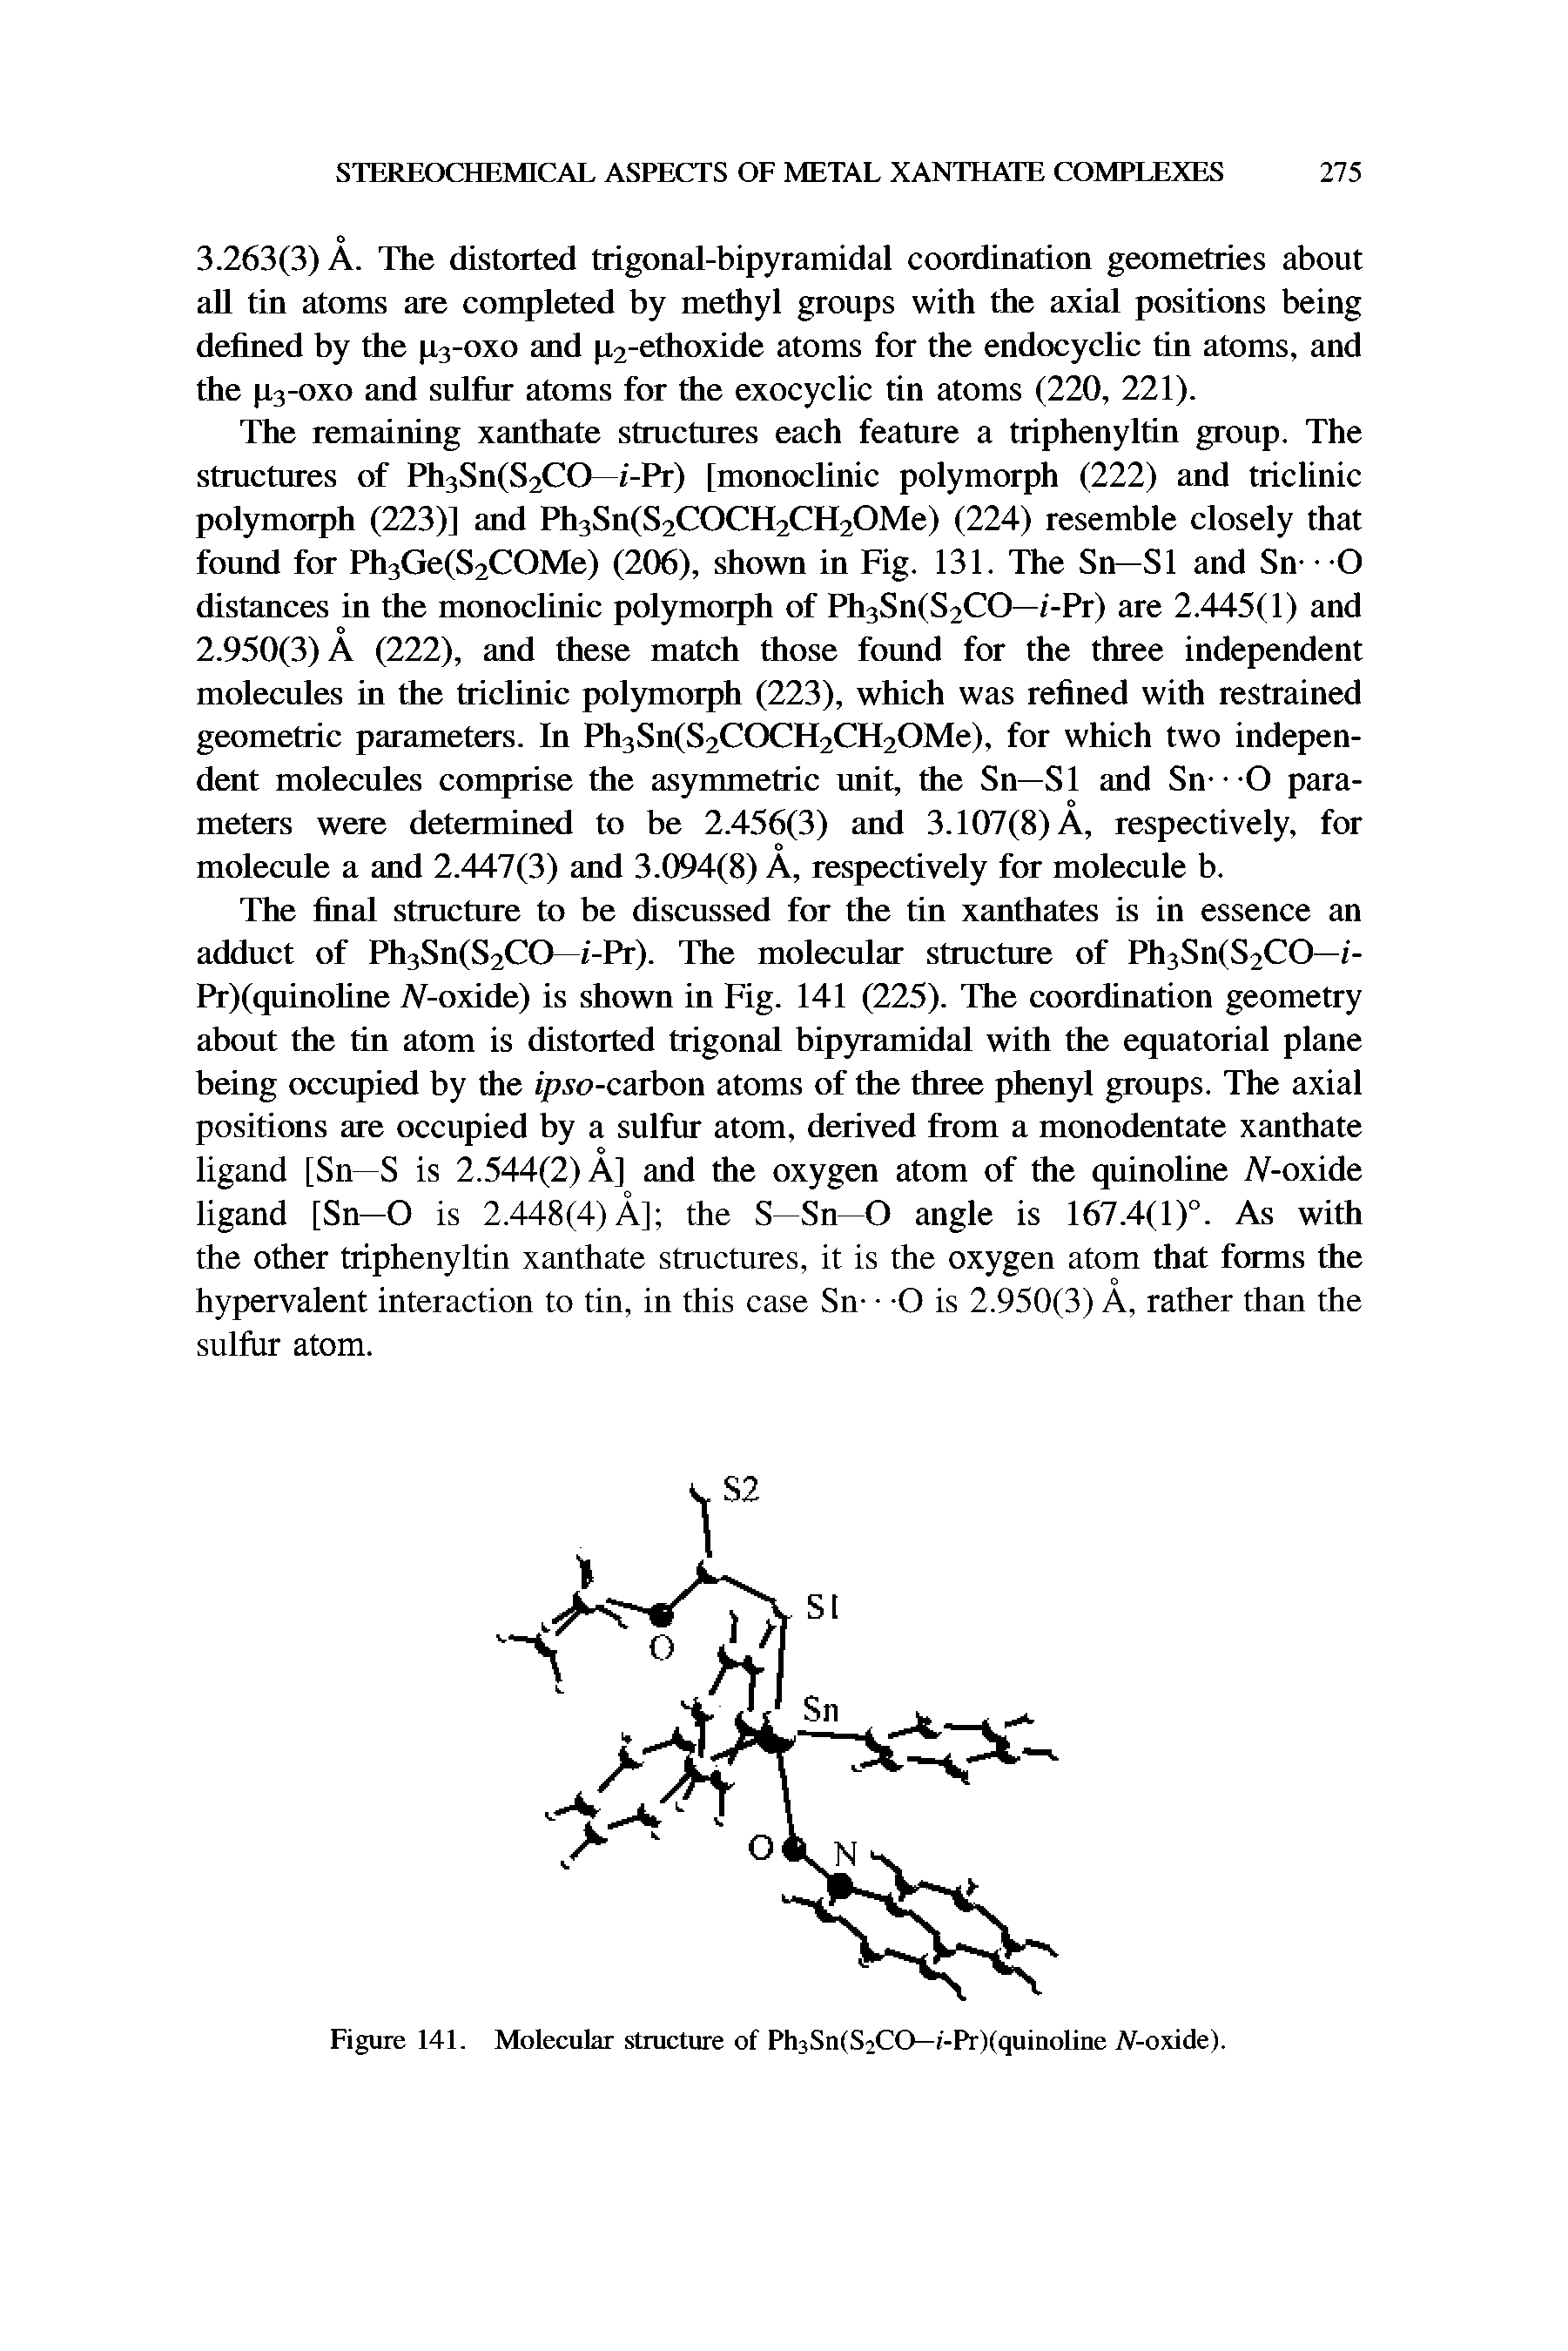 Figure 141. Molecular structure of PhiSn(S2CO—i-Pr((quinoline /V-oxide).